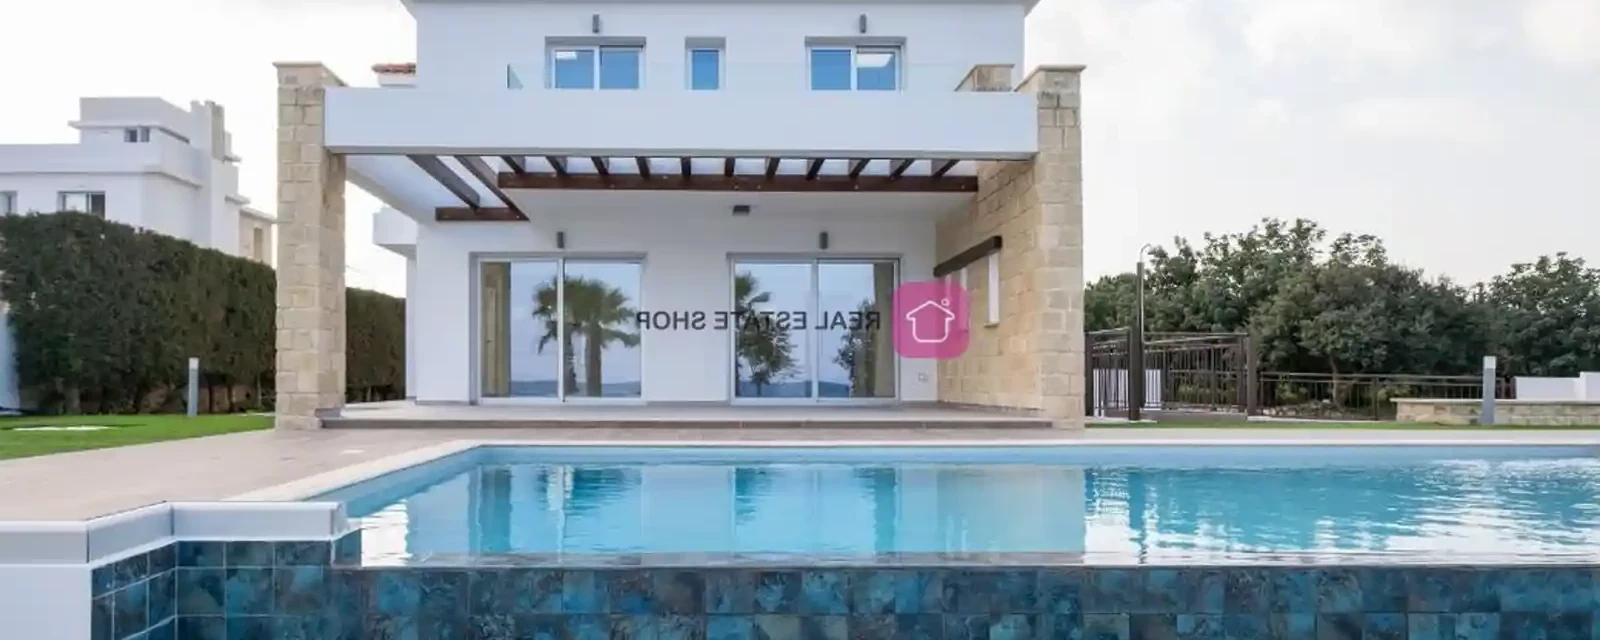 3-bedroom villa fоr sаle €1.200.000, image 1